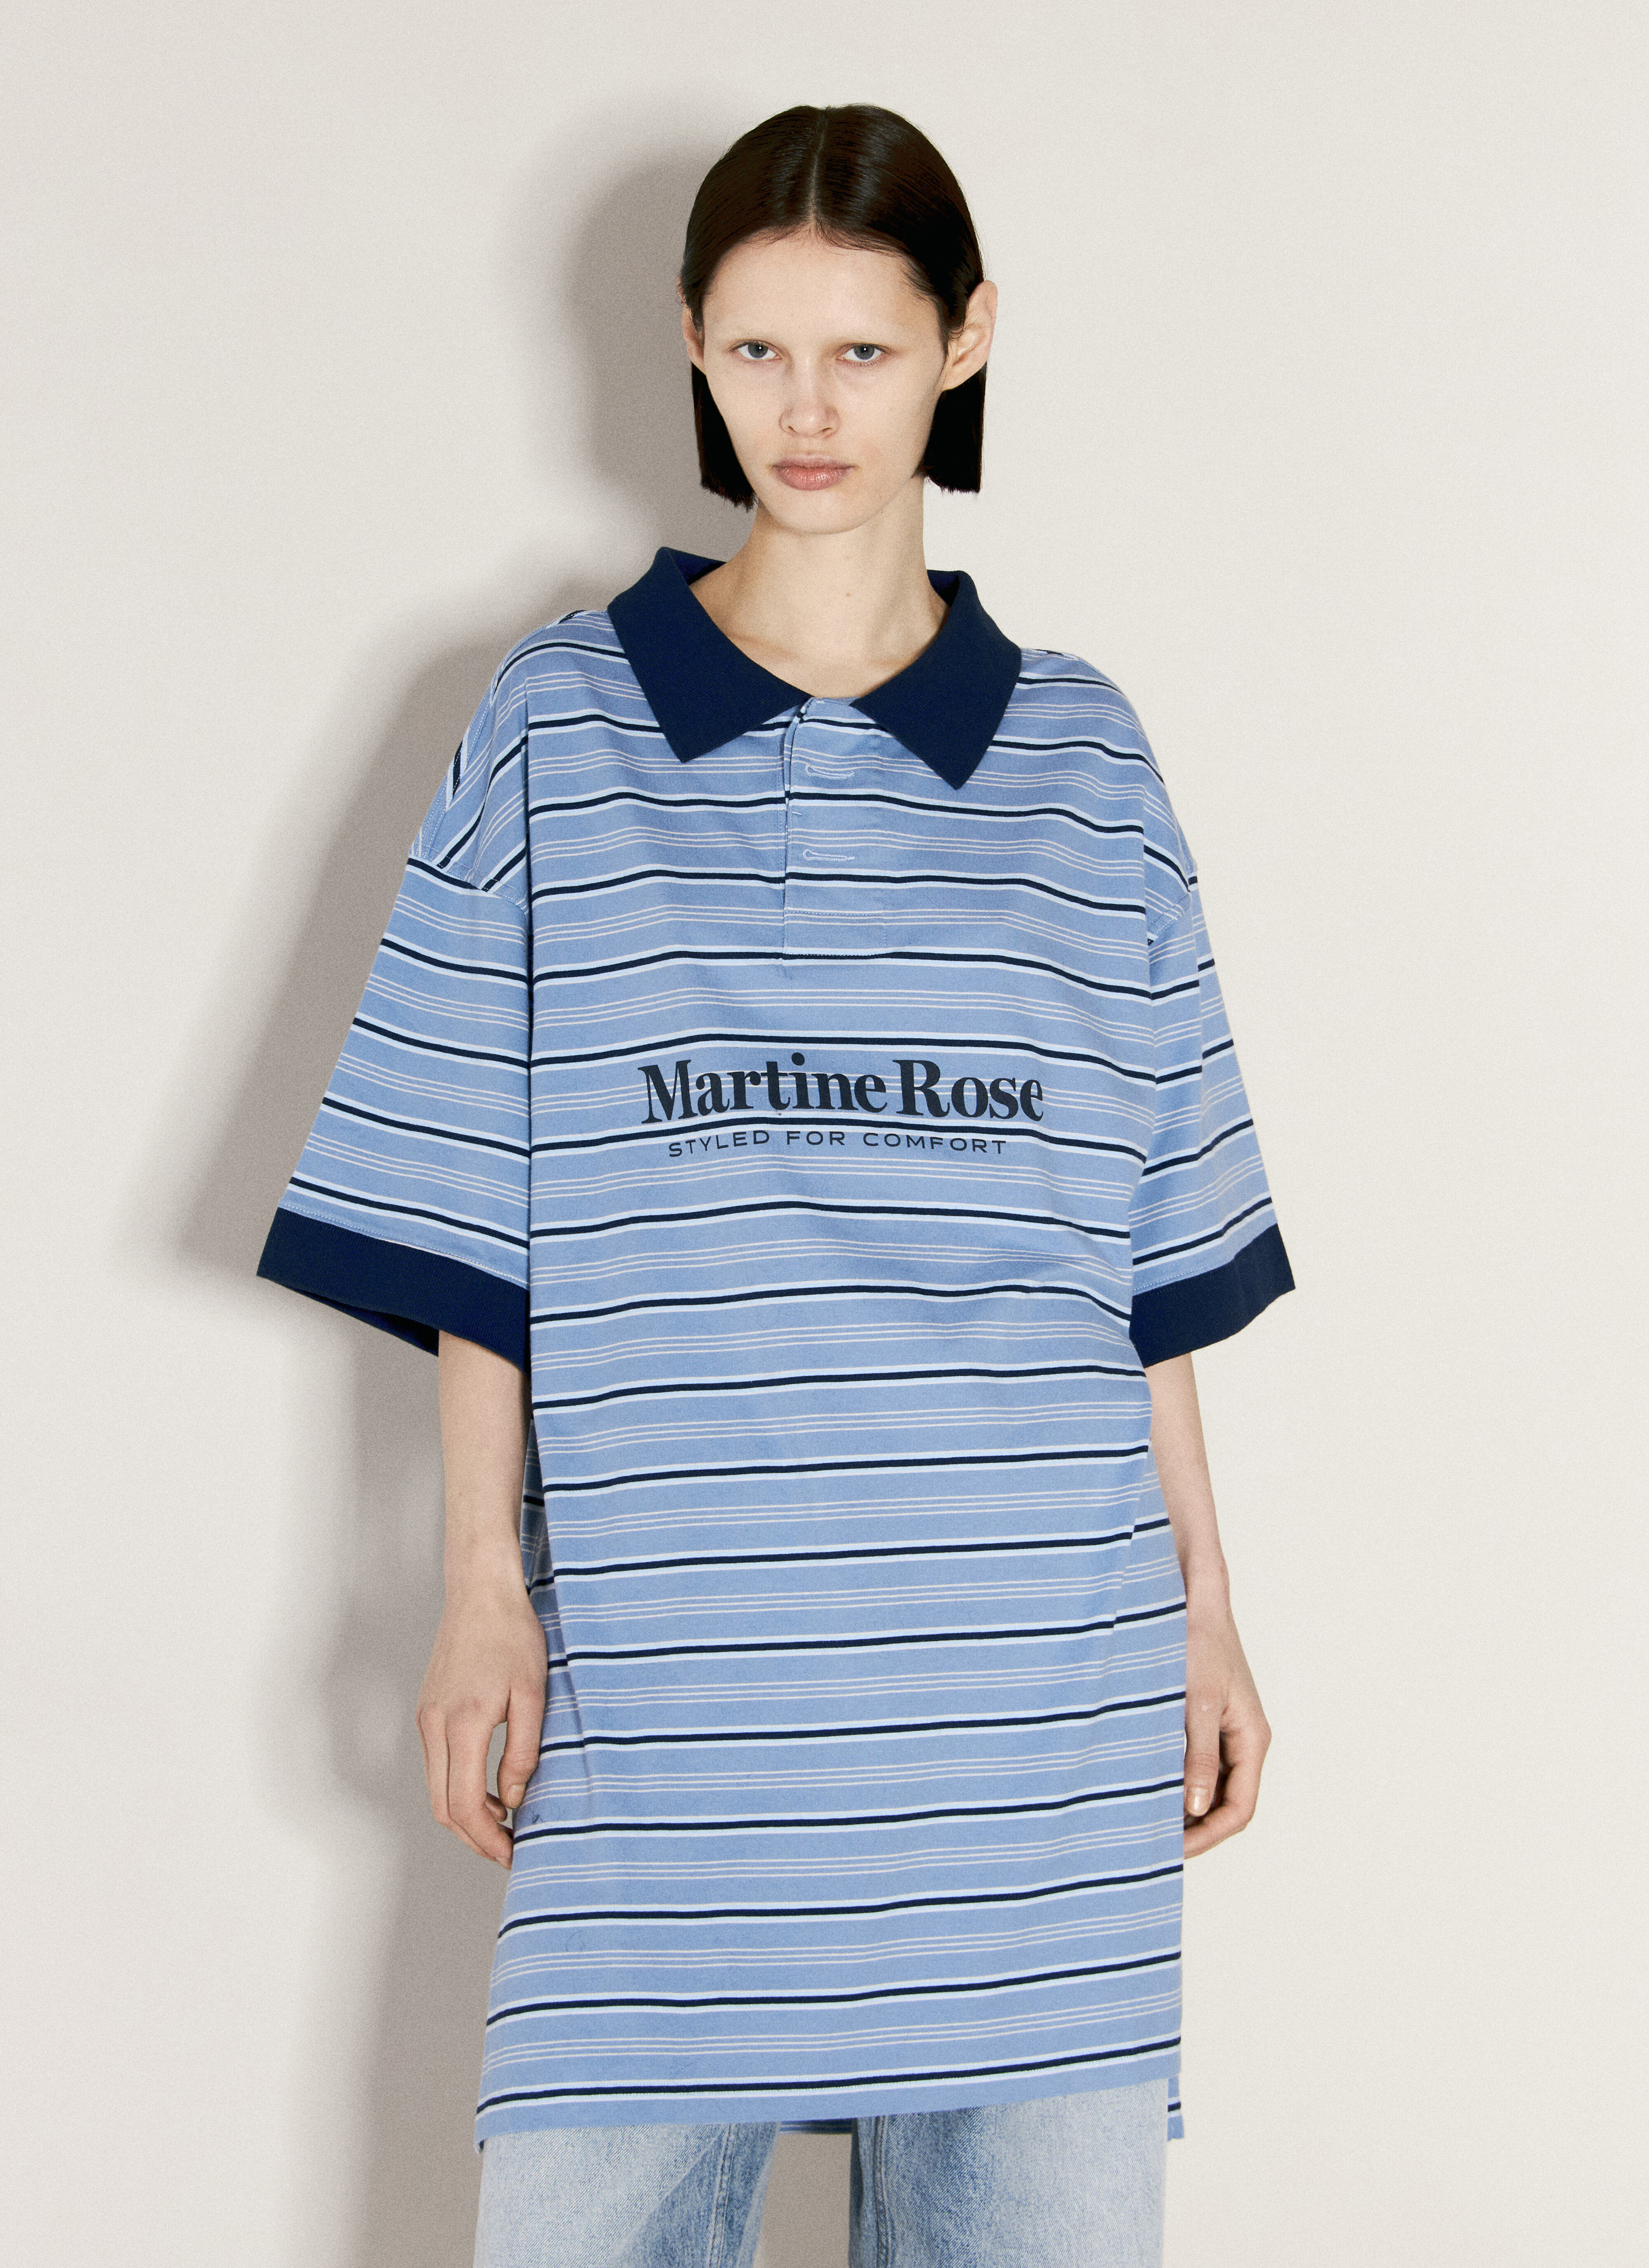 Martine Rose Striped Polo Shirt Blue mtr0255004